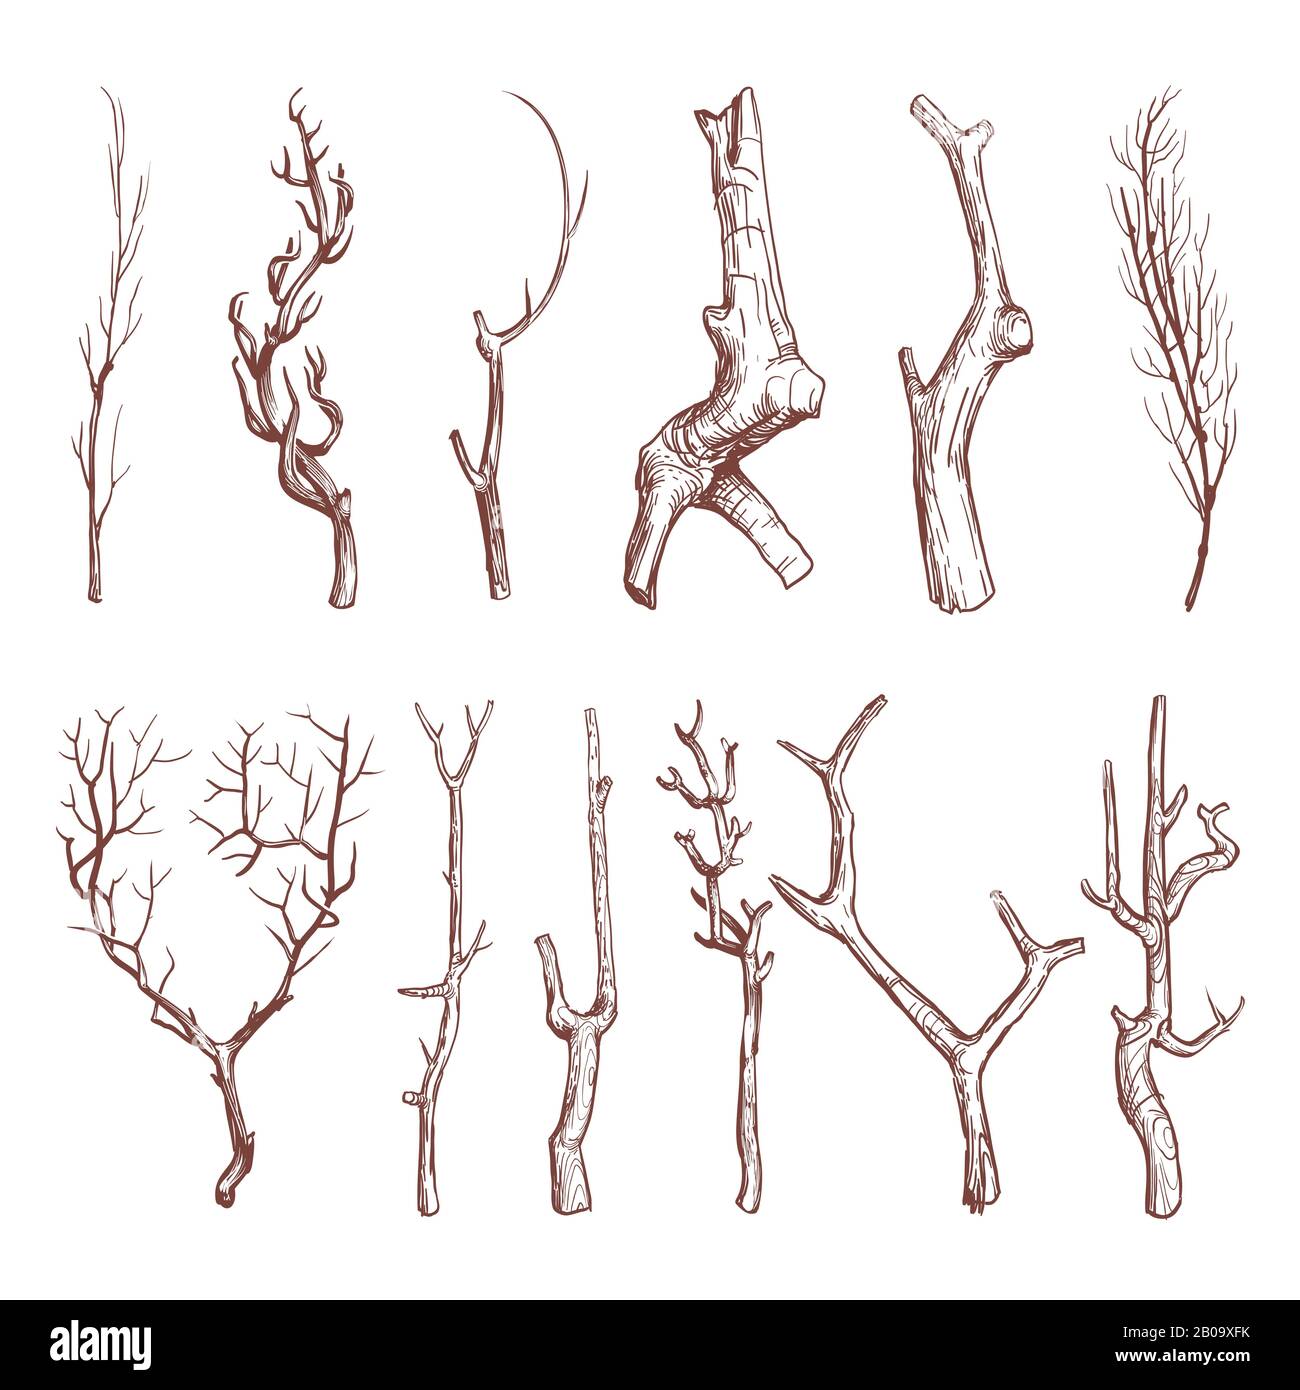 7 Arts twig ideas  tree drawing drawings twig art